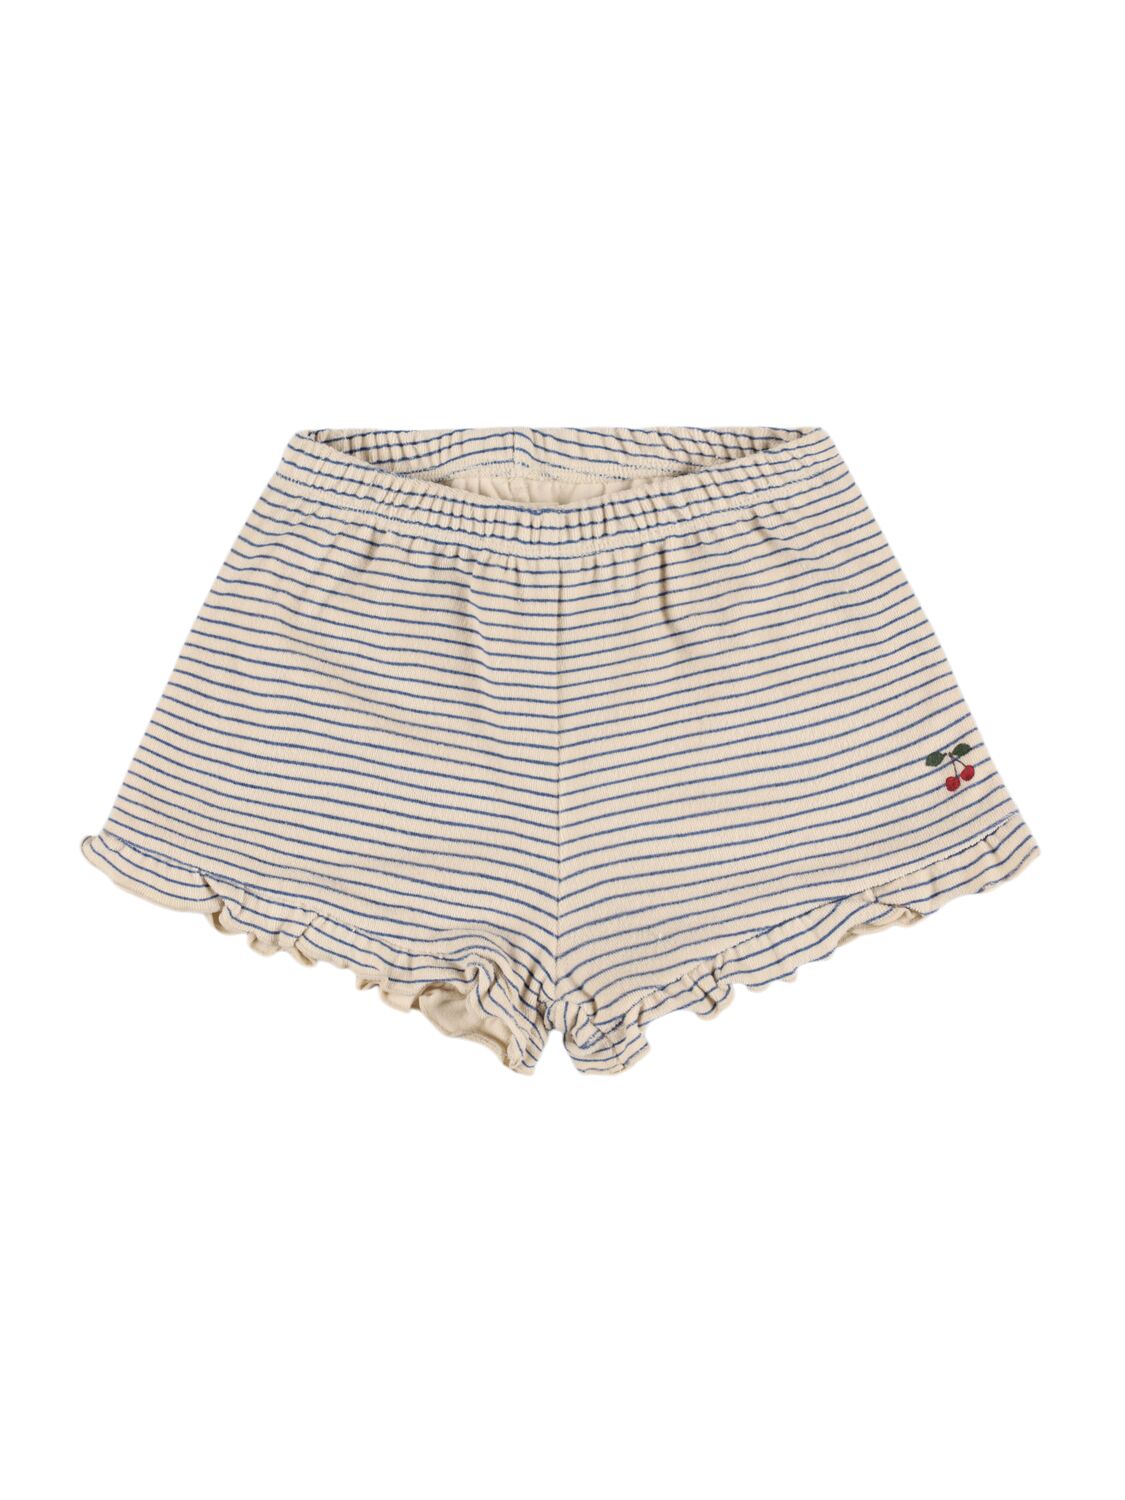 Image of Striped Organic Cotton Jersey Shorts